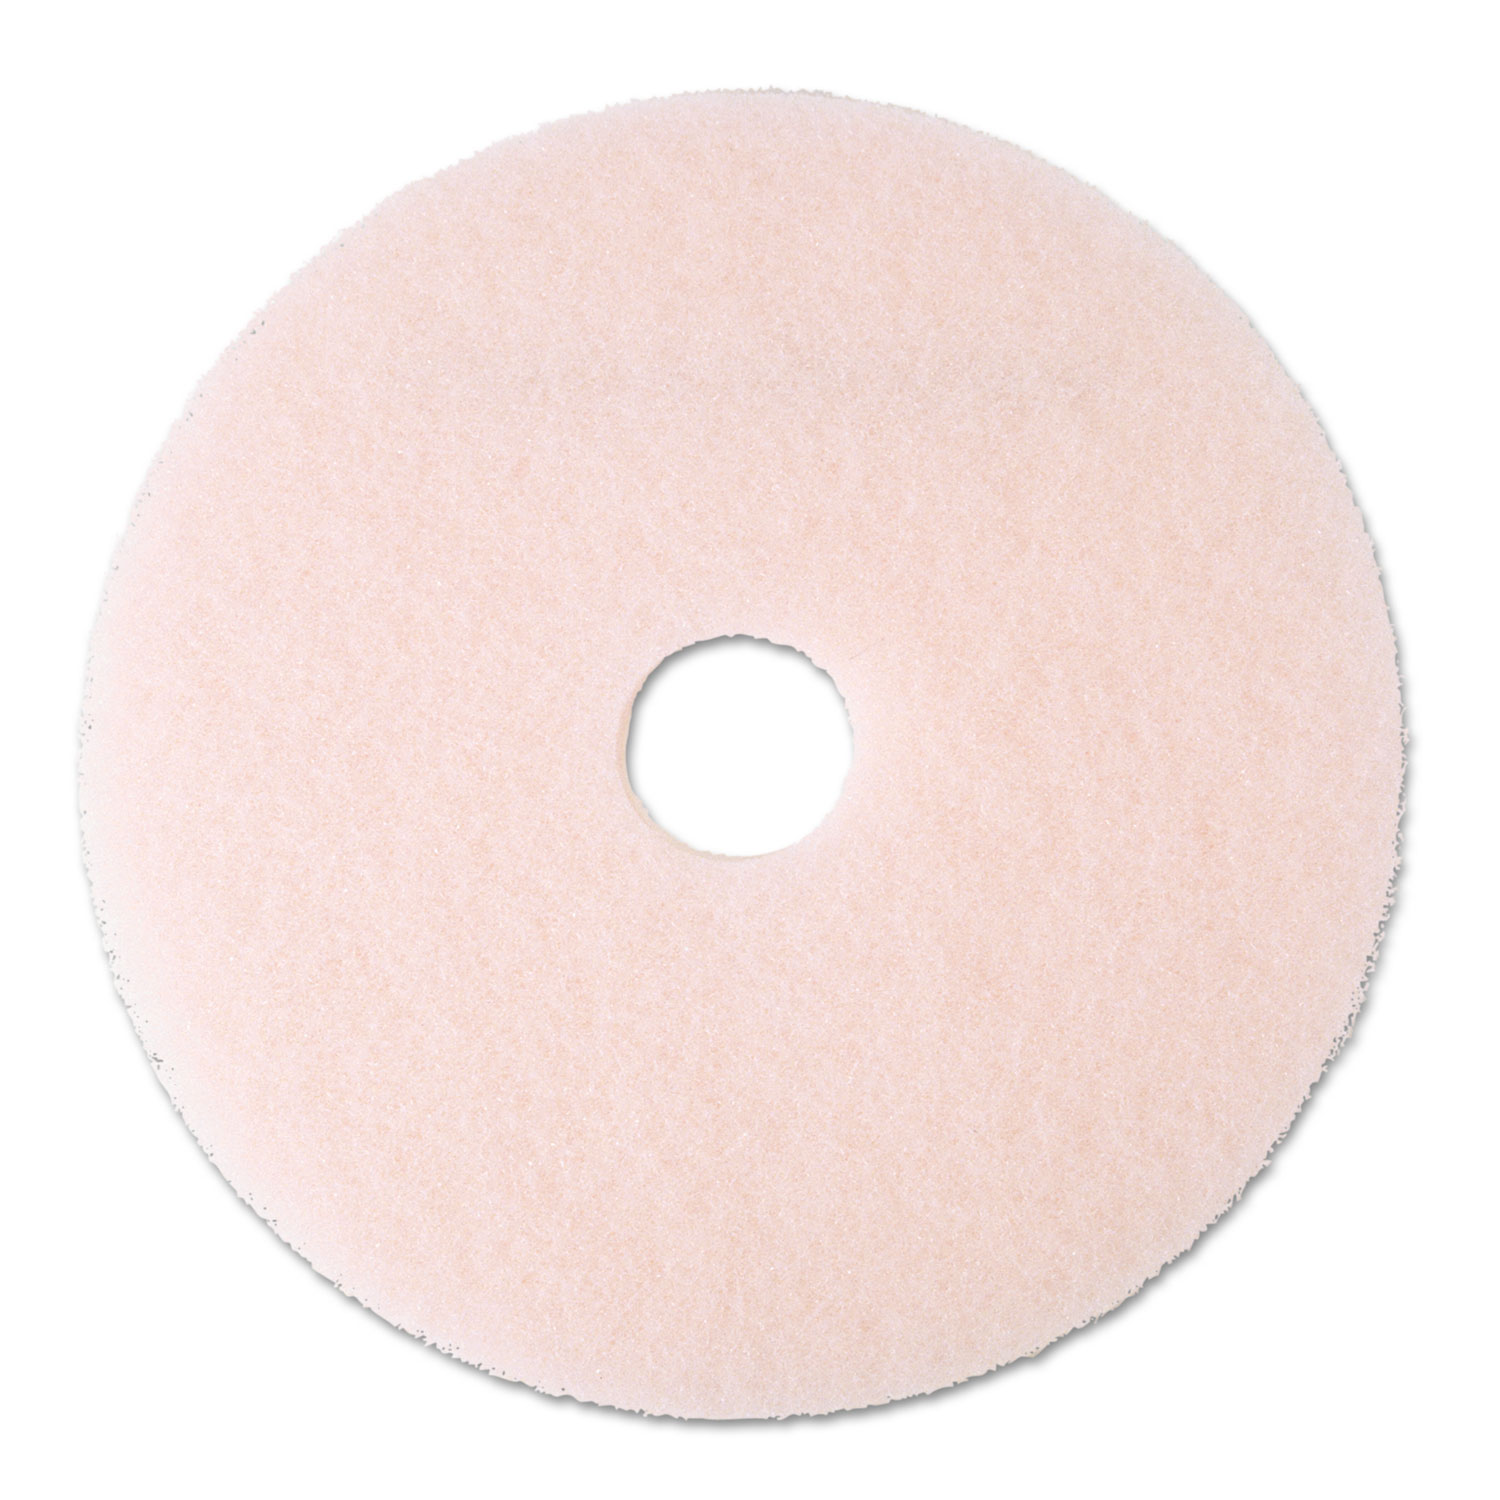  3M 3600 Ultra High-Speed Eraser Floor Burnishing Pad 3600, 20 Diameter, Pink, 5/Carton (MMM25858) 